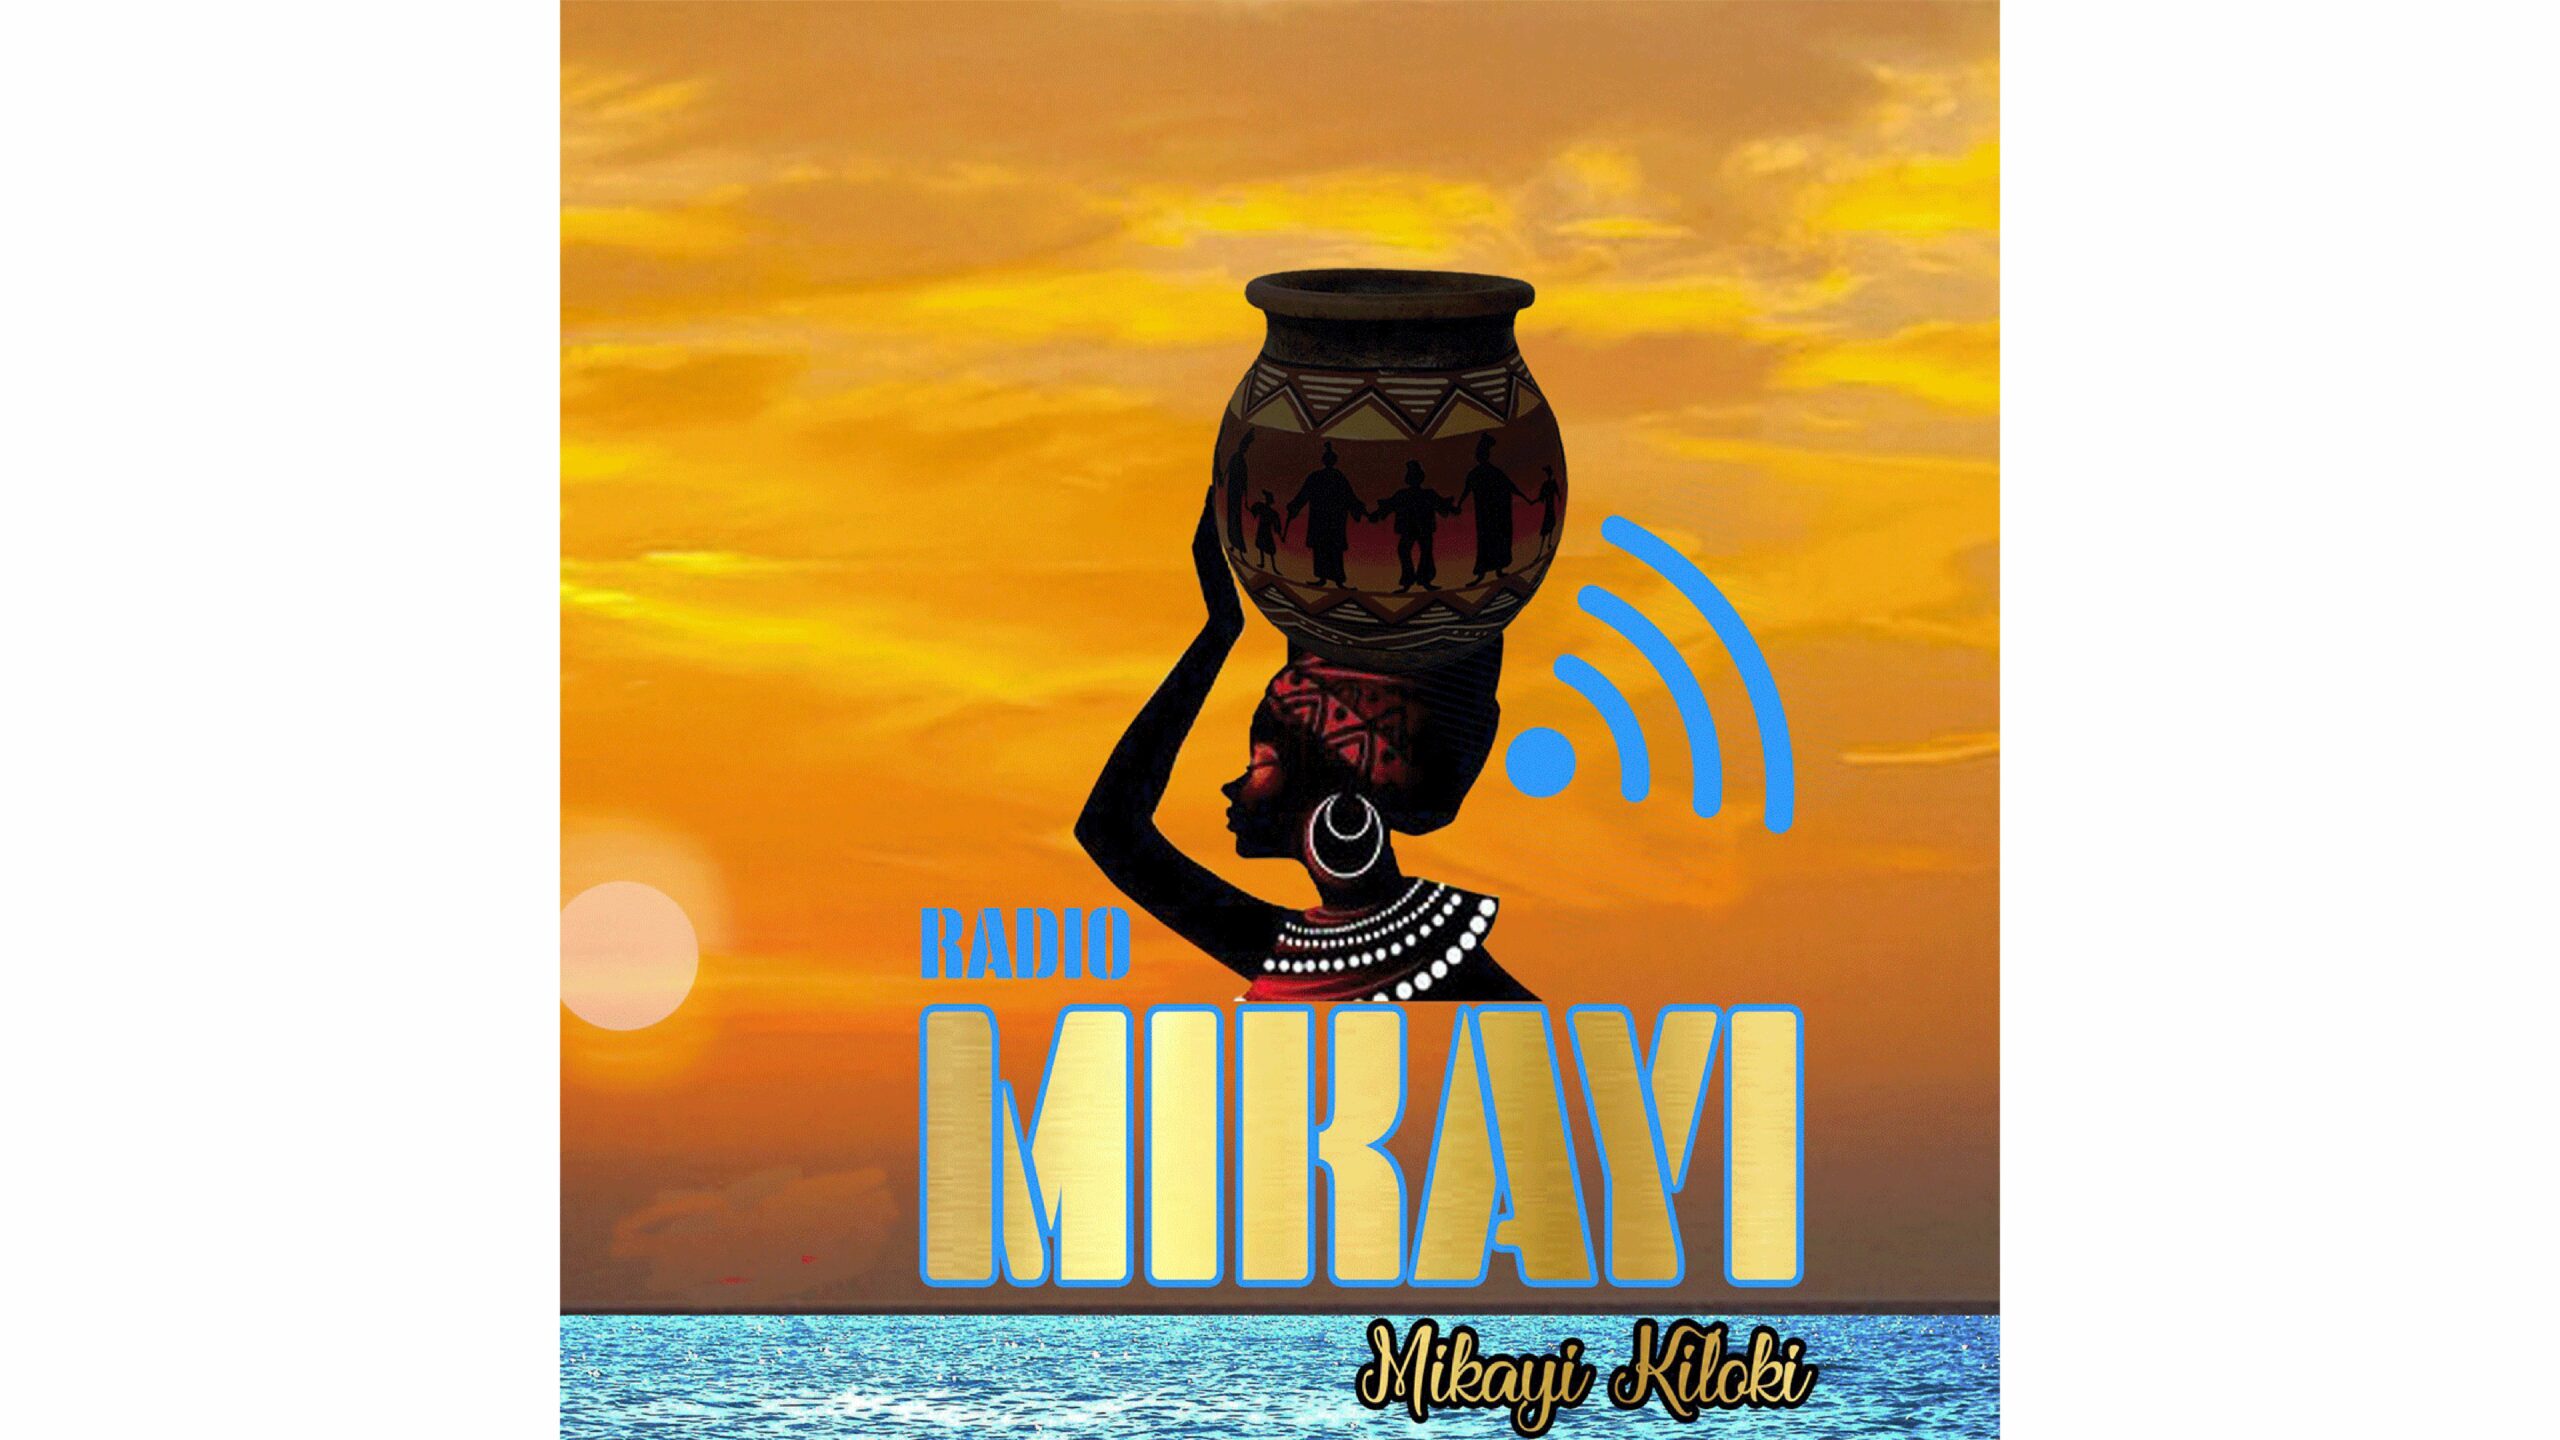 Radio Mikayi36 scaled